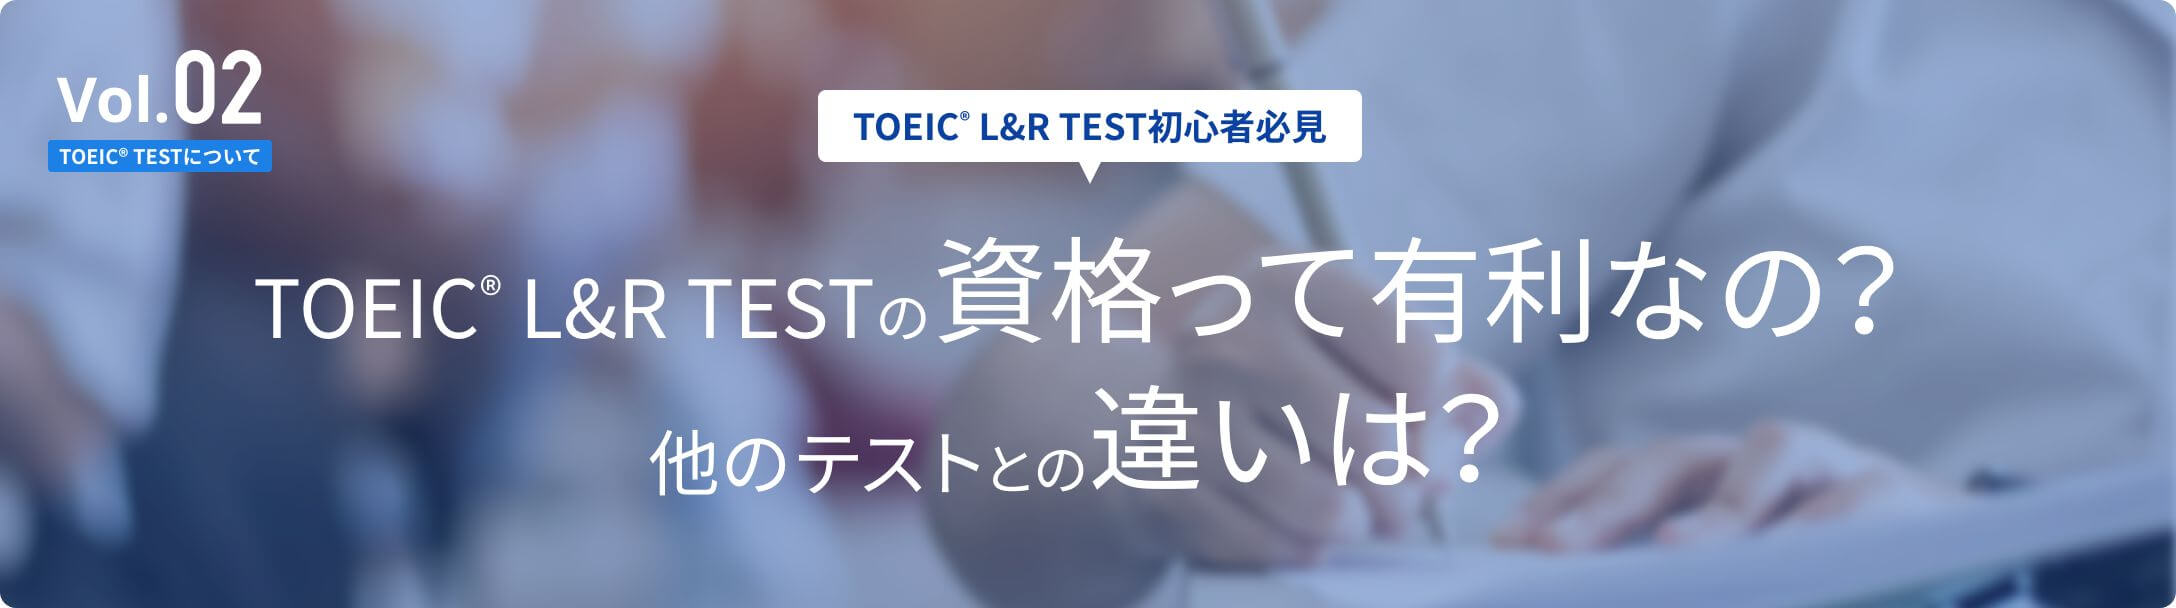 Vol.02[TOEIC®TESTについて]【TOEIC® TEST初心者必見】TOEIC® L&R TESTの資格って有利なの？他のテストとの違いは？